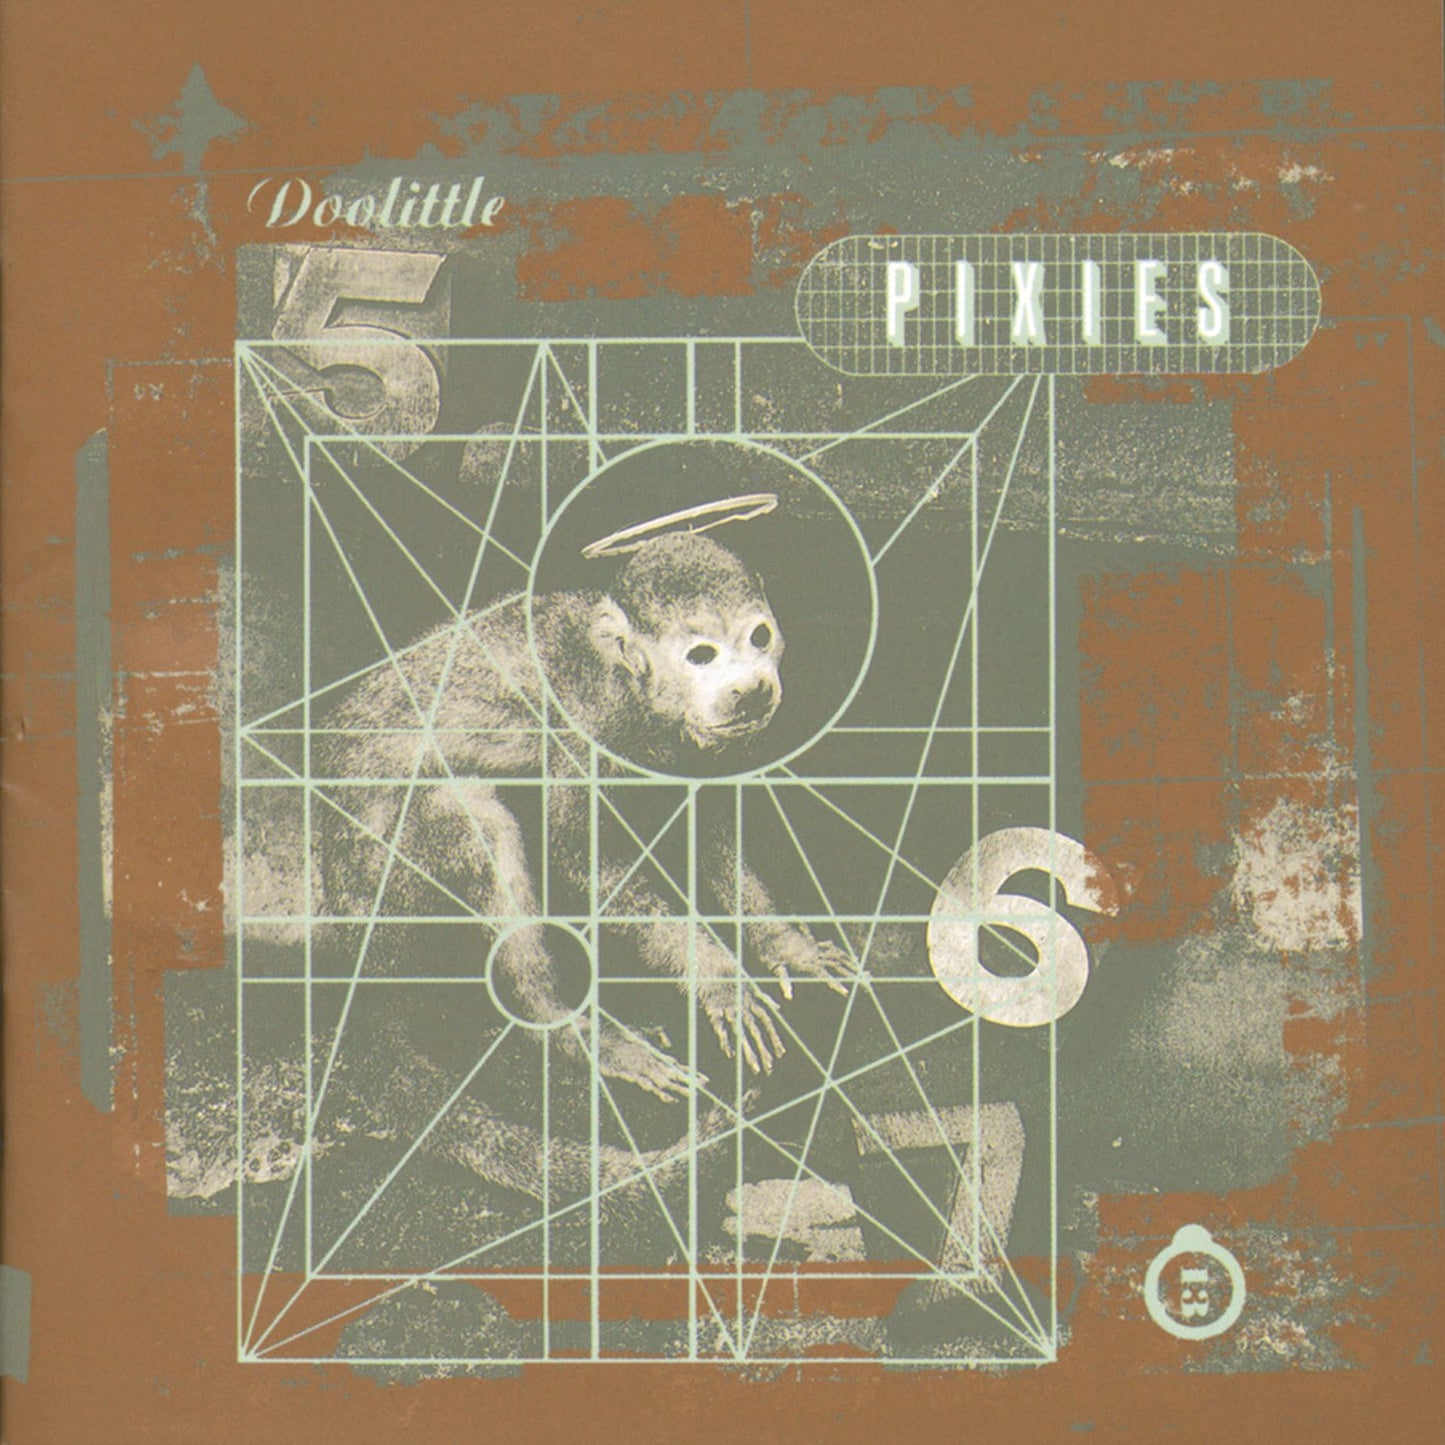 PIXIES - DOOLITTLE - VINYL LP